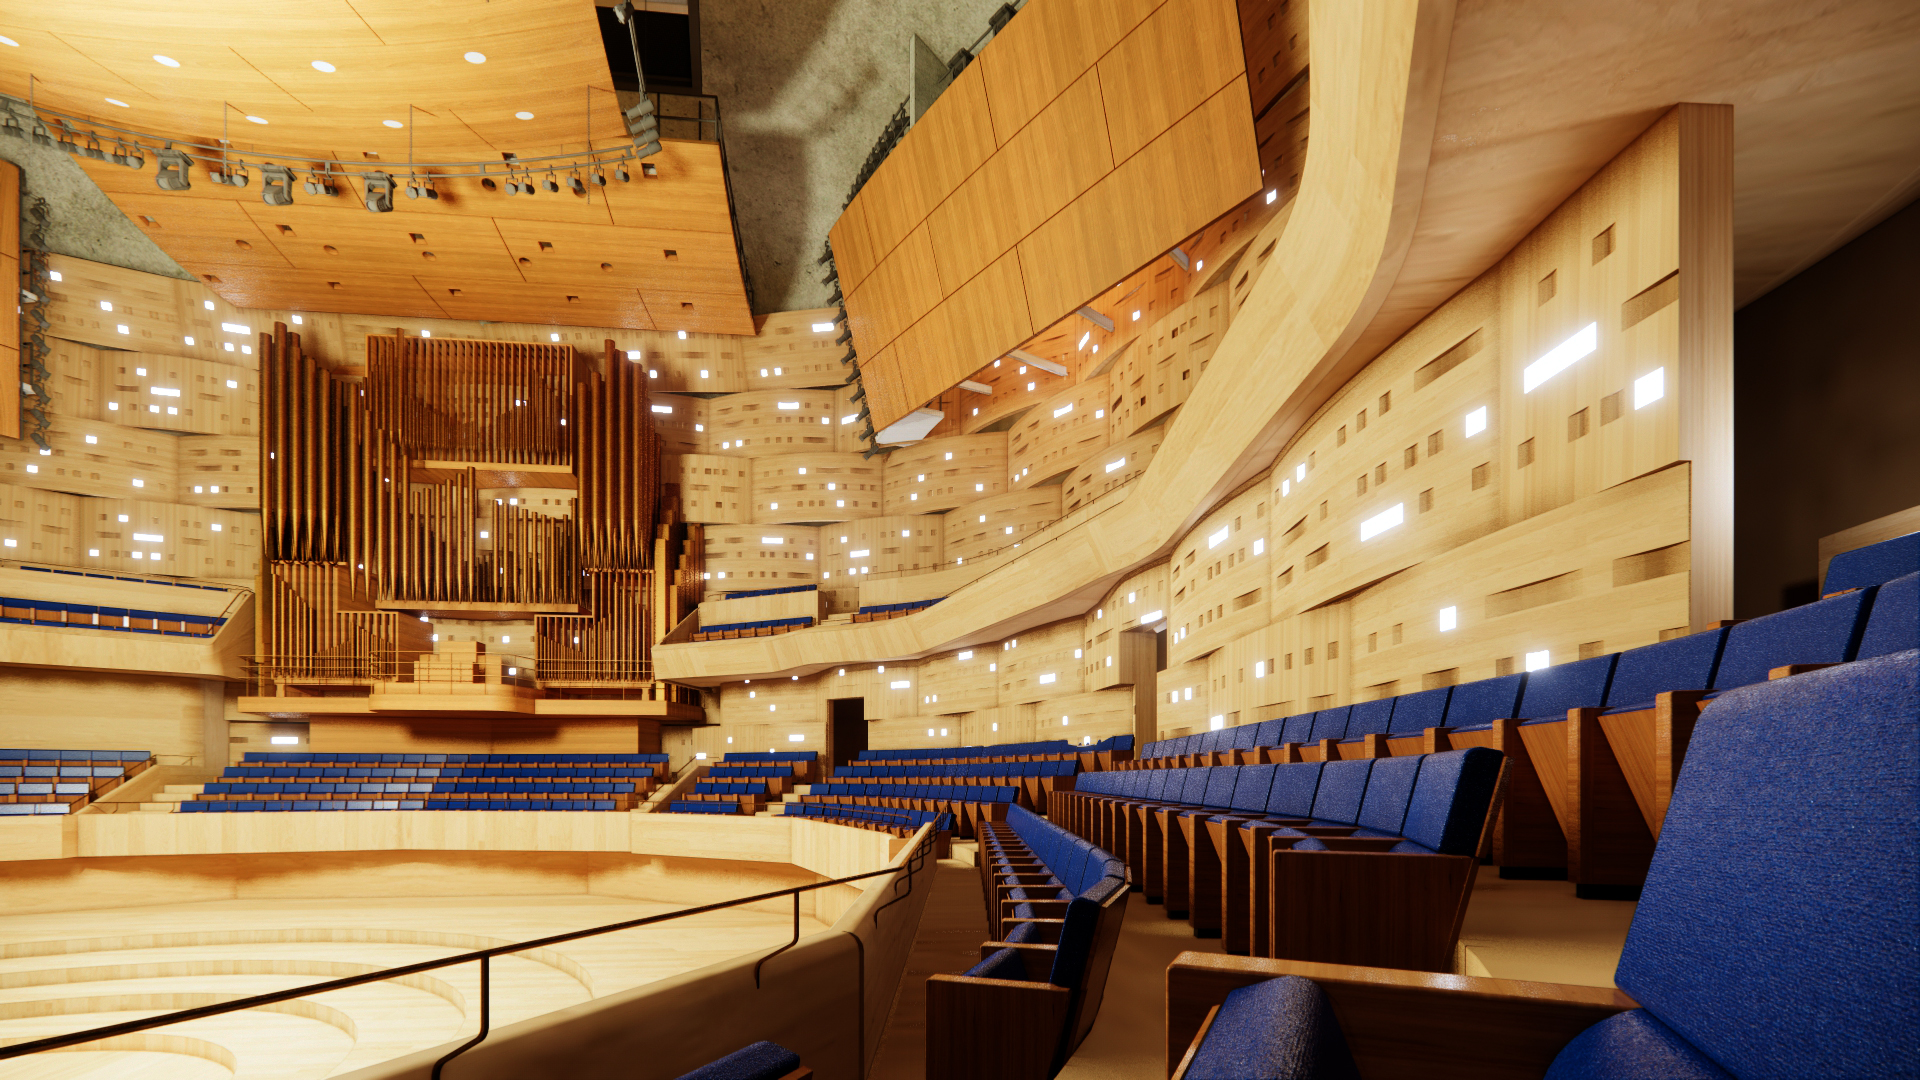 Ostrava Concert Hall is scheduled to break ground in September 2022